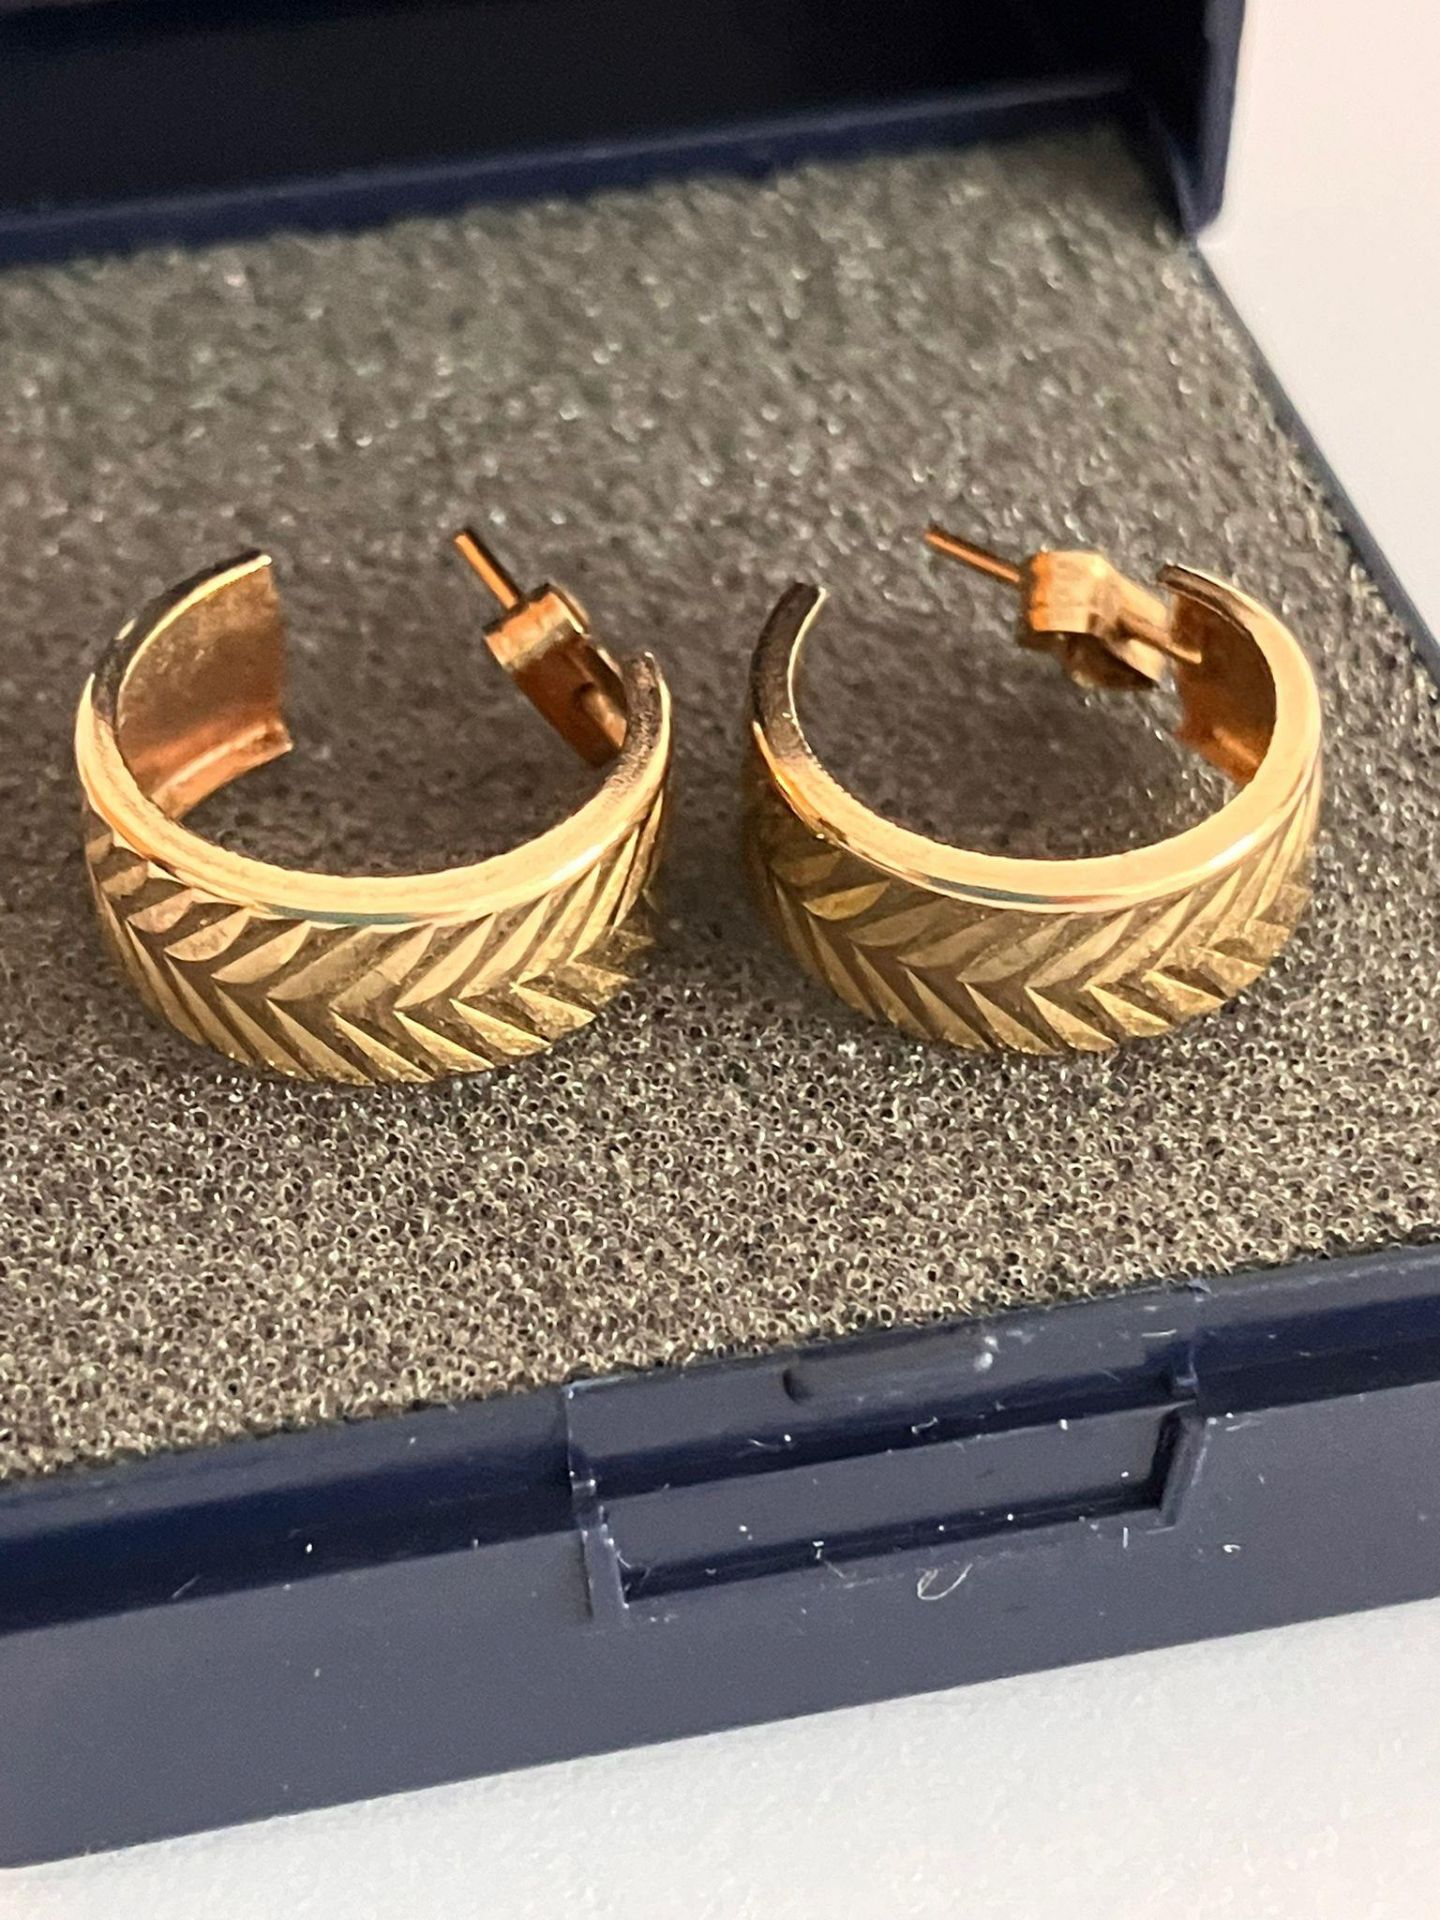 Classic 9 carat GOLD HOOP EARRINGS. Chevron design. Complete with Gold Backs. 1.5 cm Diameter. 0.